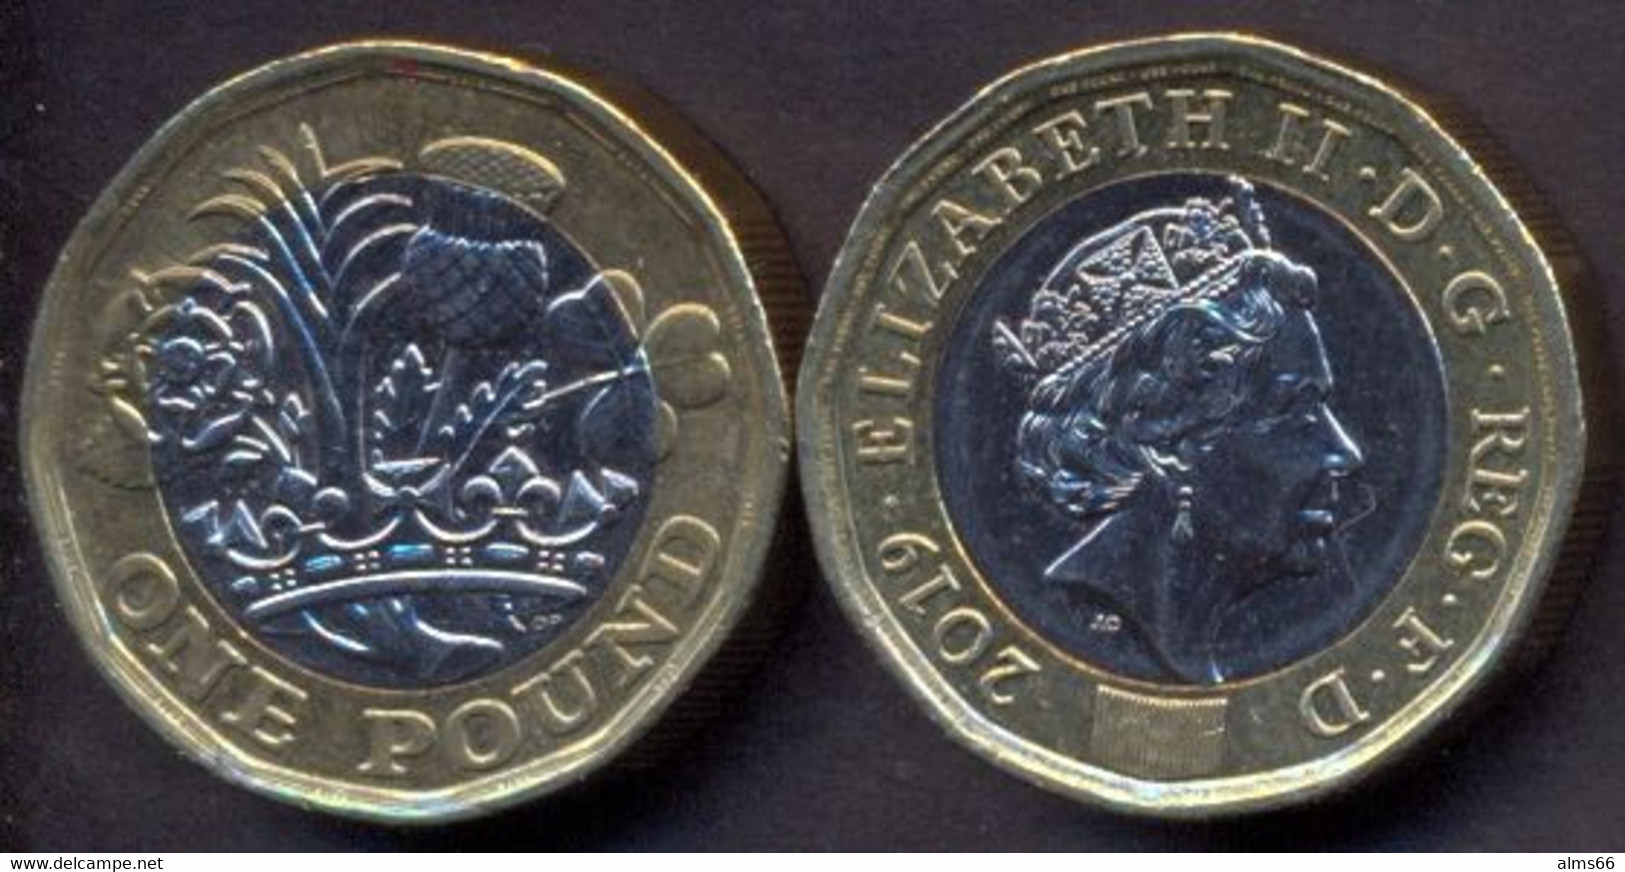 Great Britain UK 1 Pound 2019 XF+ - 1 Pound